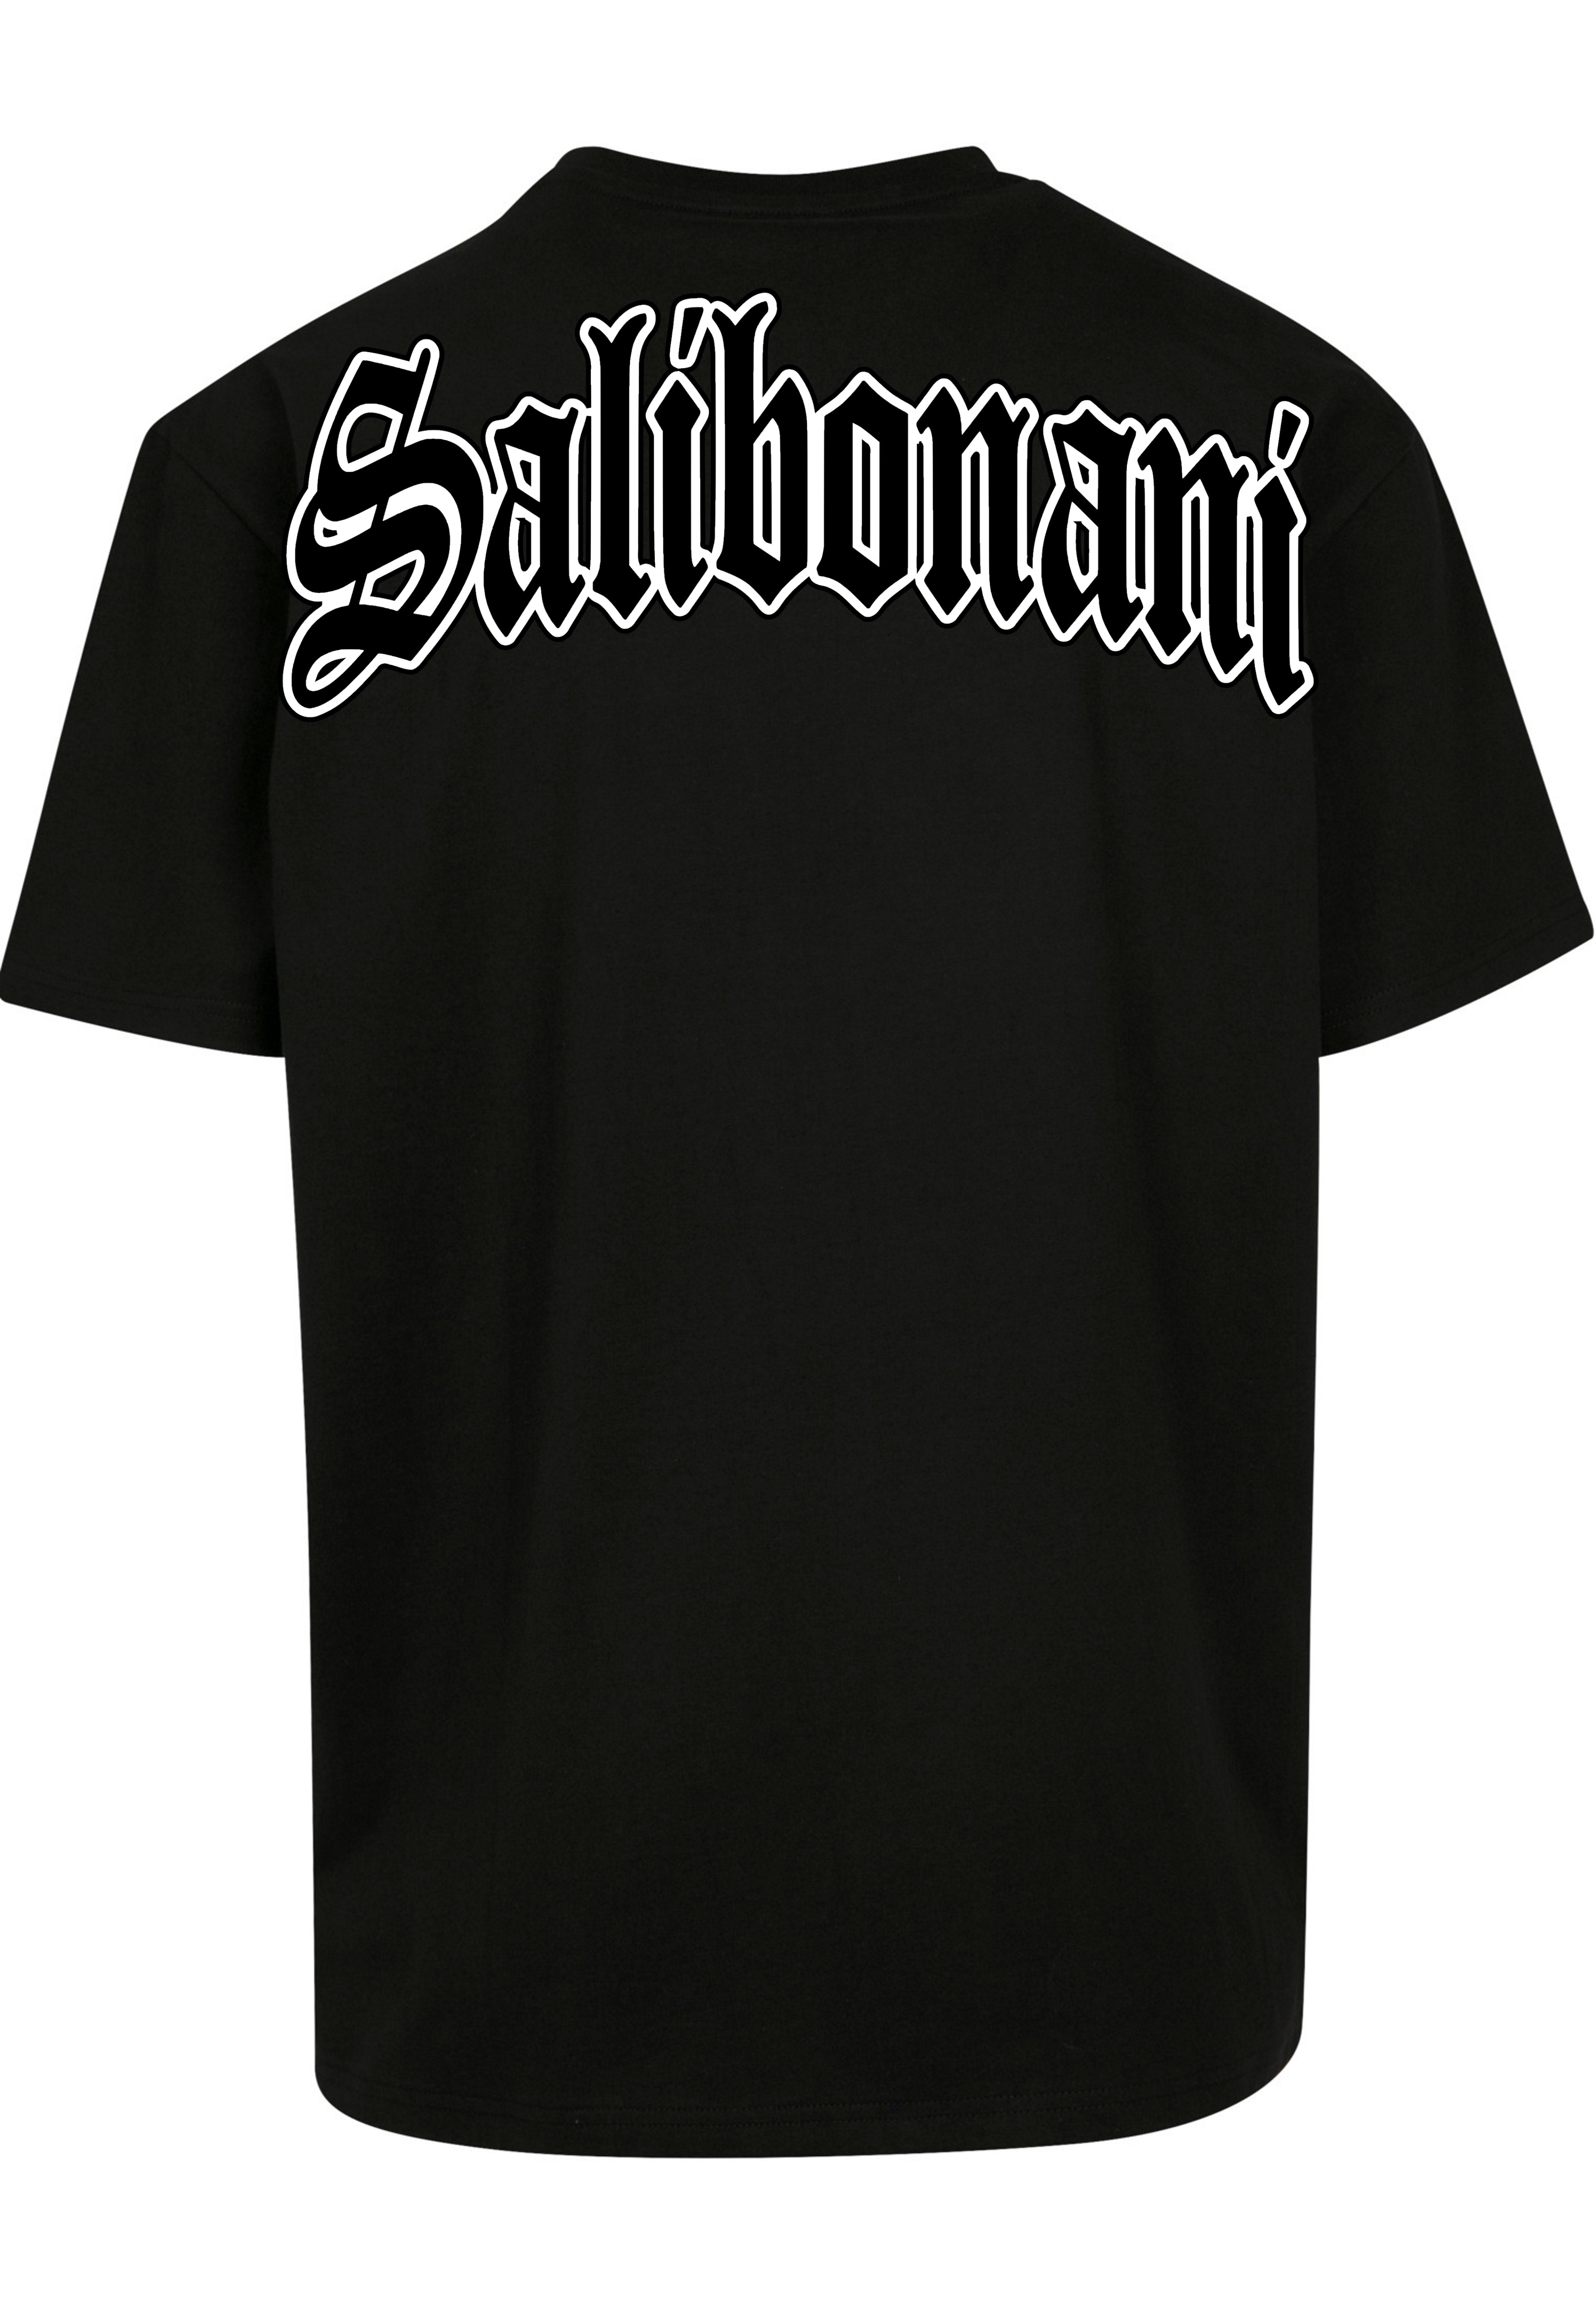 Salibonani Flo Shirt